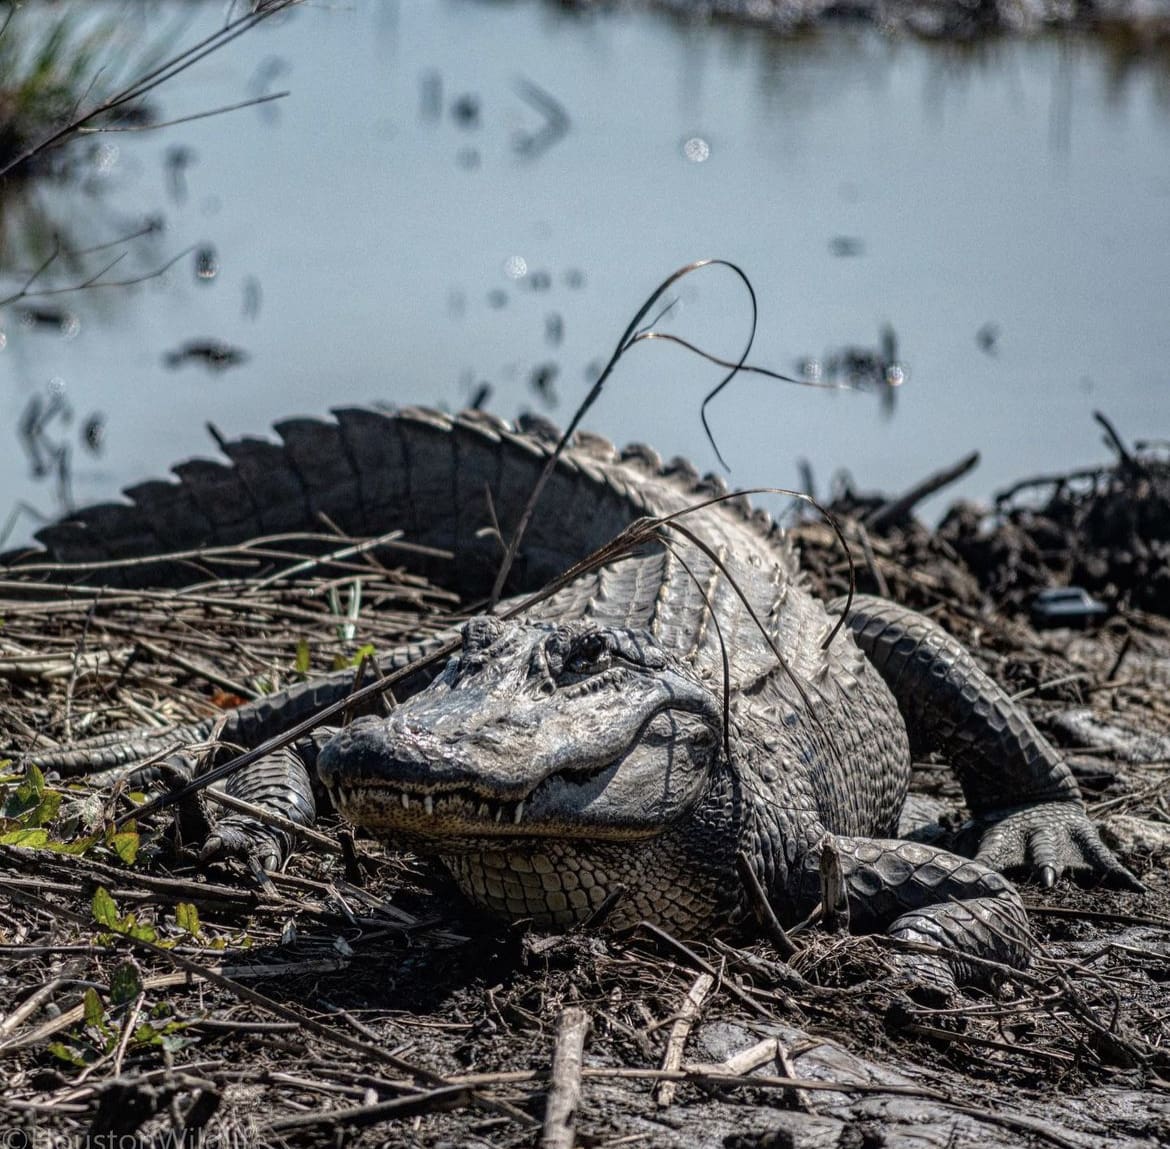 American Alligator sunning on the bank - Crocodiles Vs Alligators